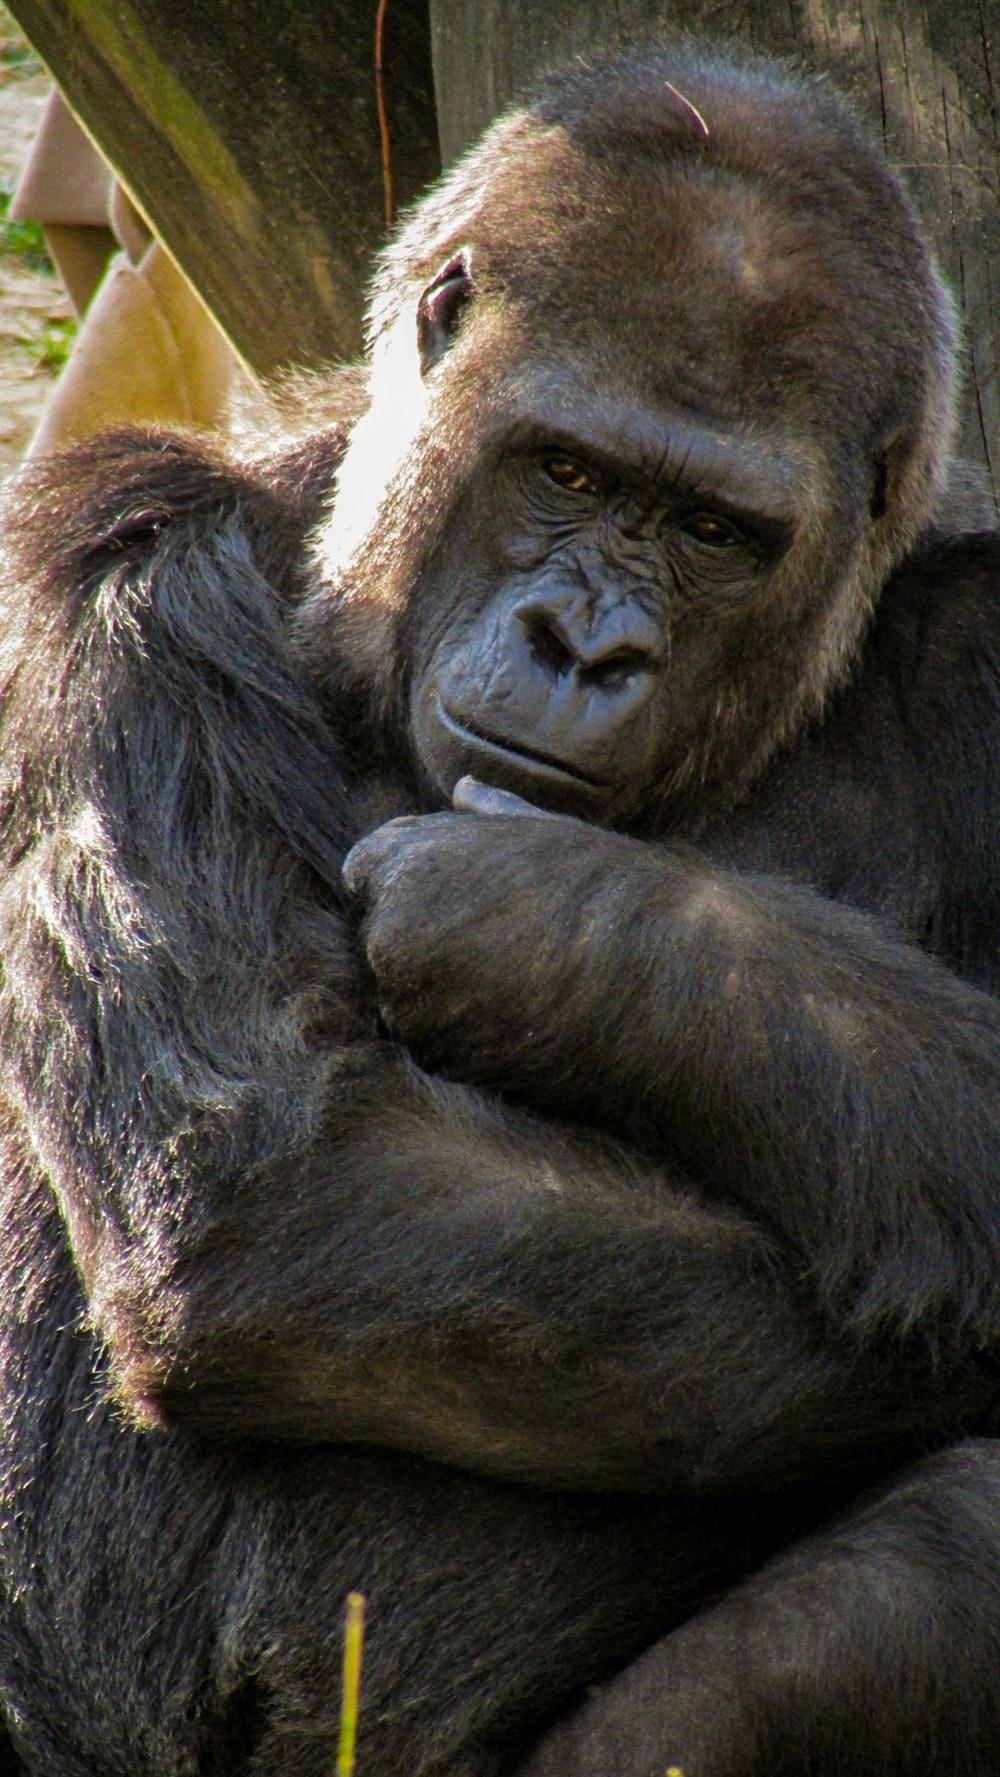 Gorilla Picture. Download Free Image